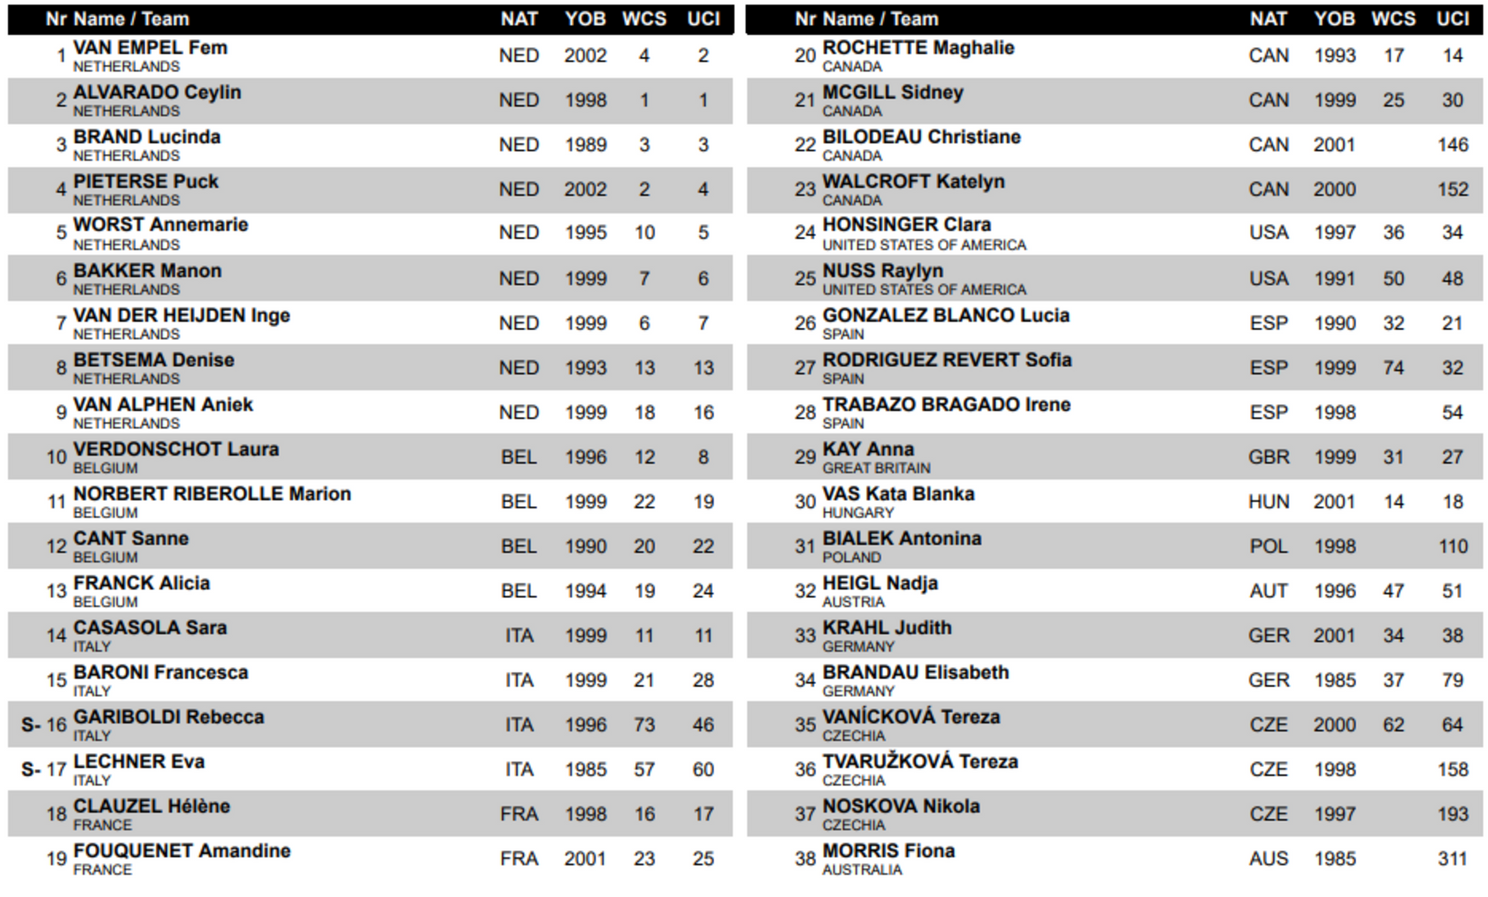 Lista de inscritos no Campeonato do Mundo de Ciclocrosse, incluindo Mathieu van der Poel, Eli Iserbyt, Michael Vanthourenhout, Fem van Empel e Puck Pieterse